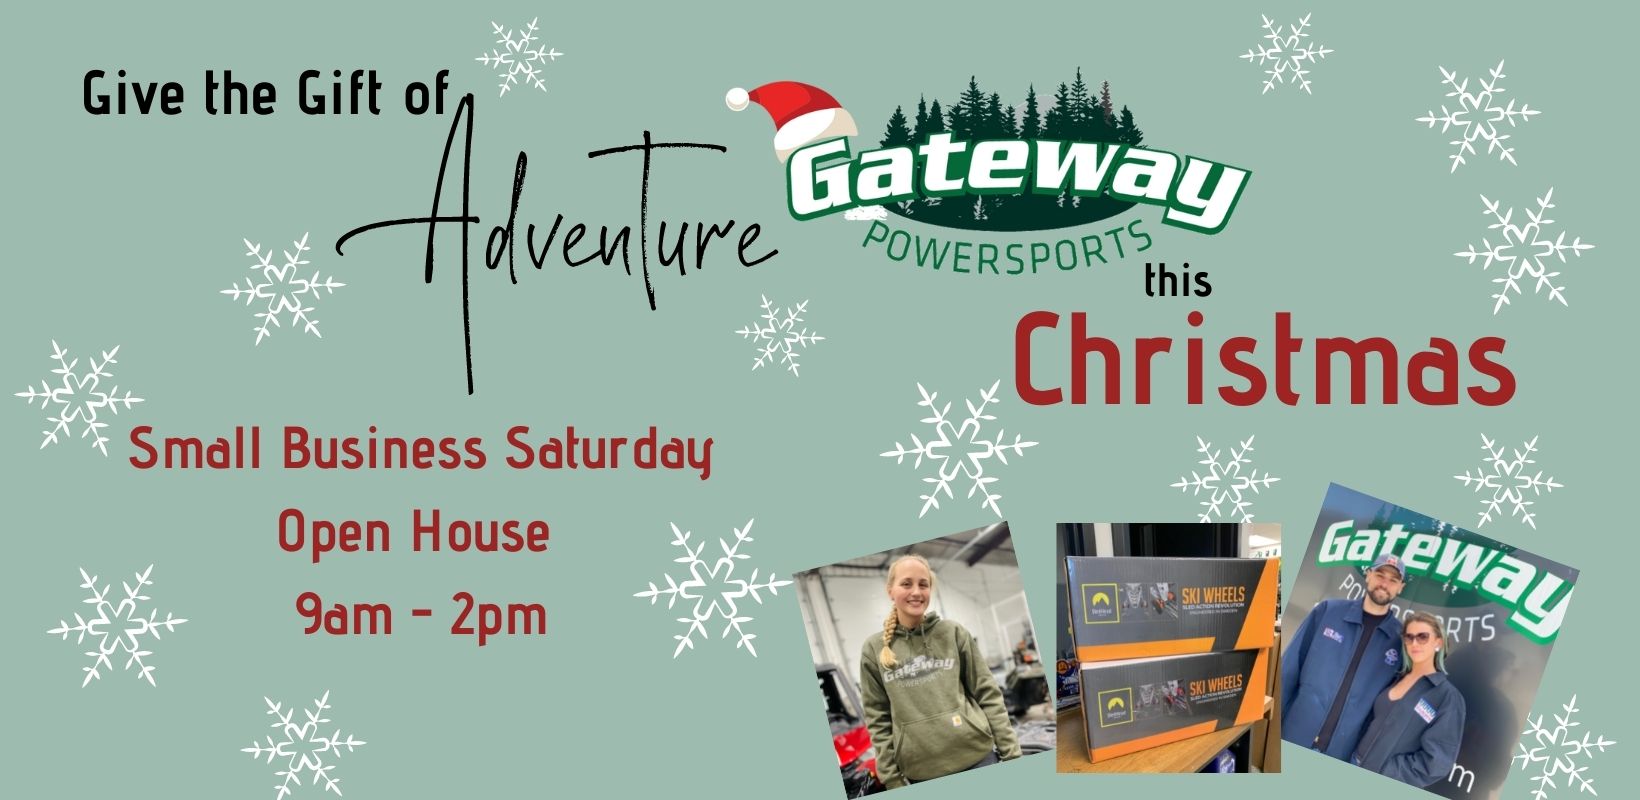 Small Business Saturday at Gateway Powersports